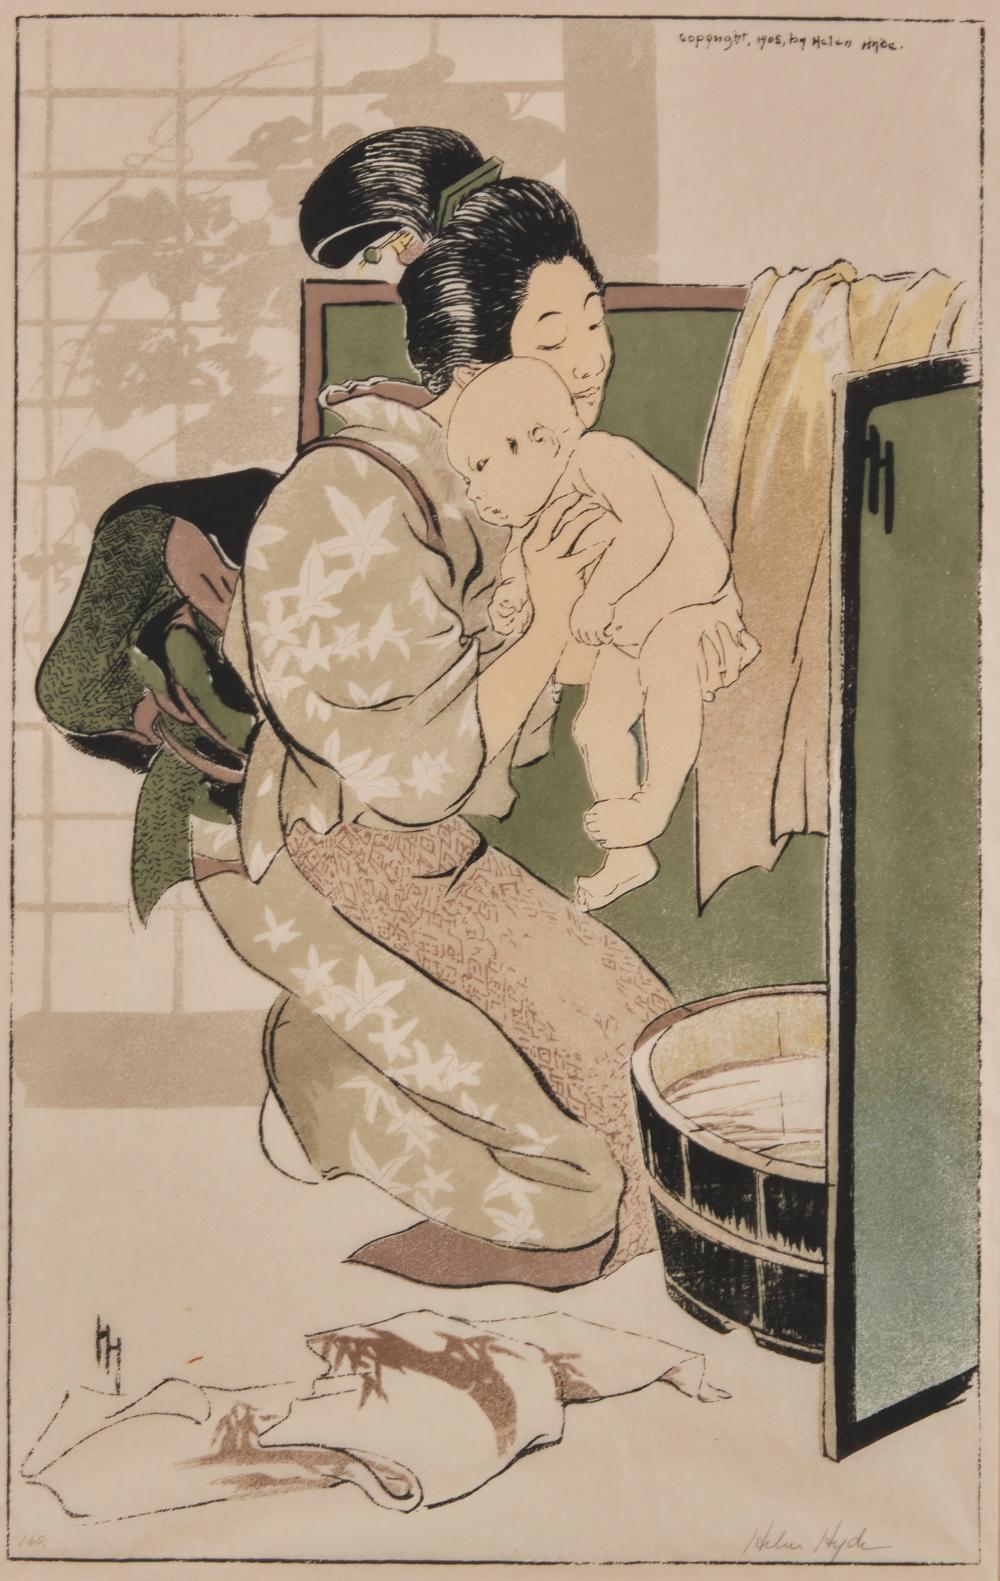 HELEN HYDE (1868-1919), "THE BATH,"